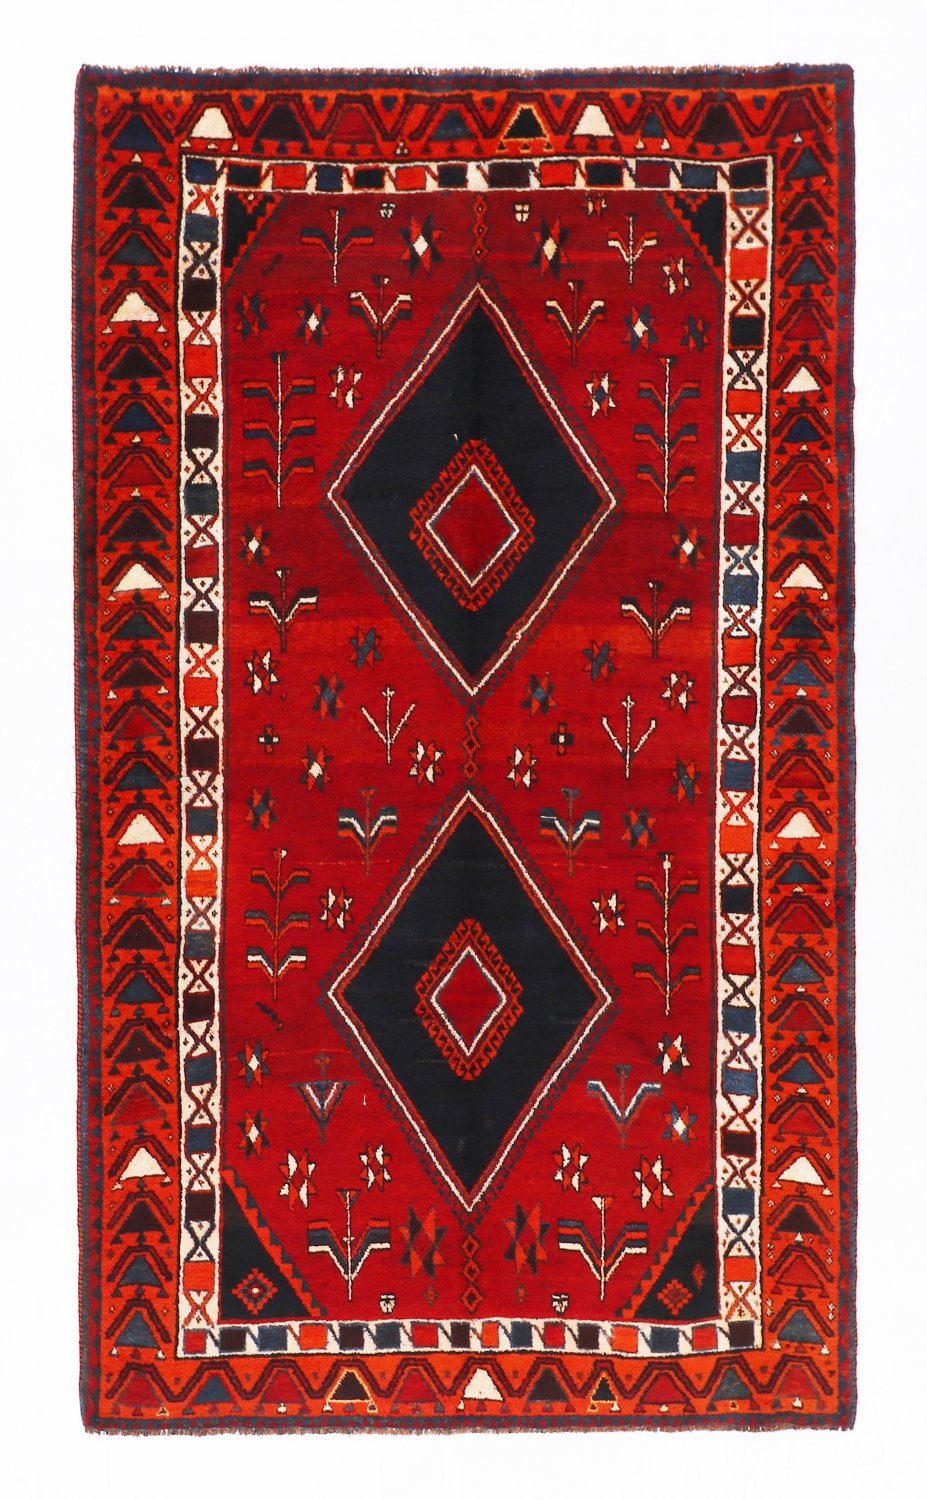 Persisk matta Hamedan 275 x 158 cm